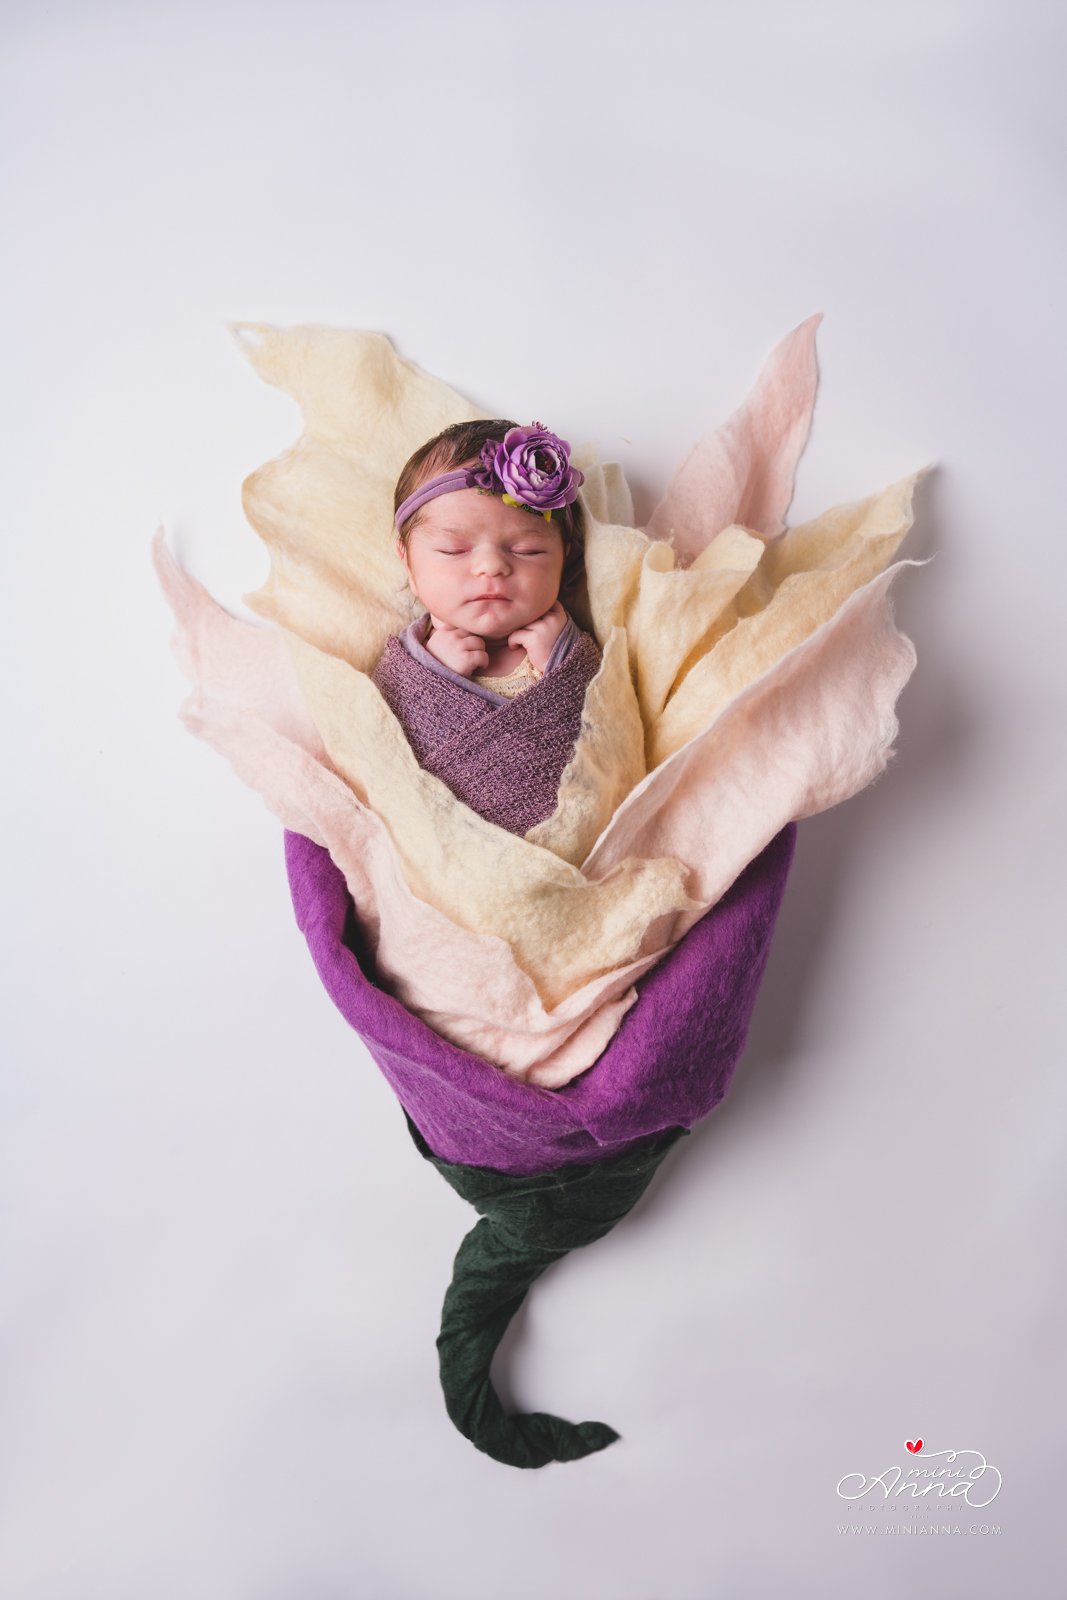 MiniAnna-BethKeolanui-Newborn-5315-retouchedsrgb-bw.jpg